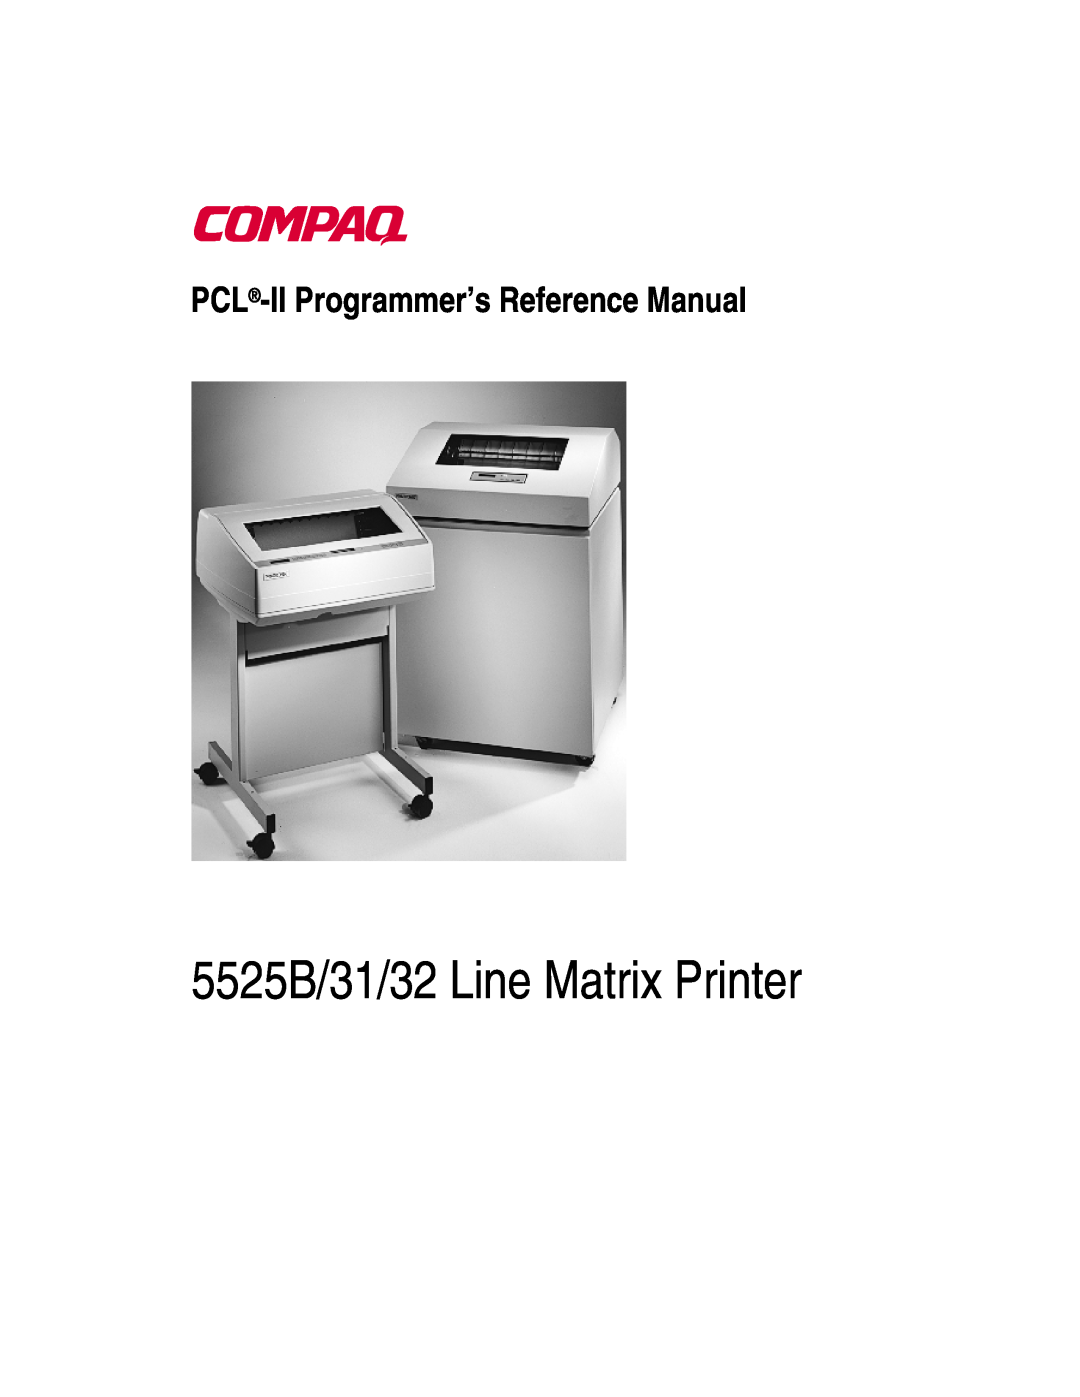 Compaq manual 5525B/31/32 Line Matrix Printer, PCL-II Programmer’s Reference Manual 